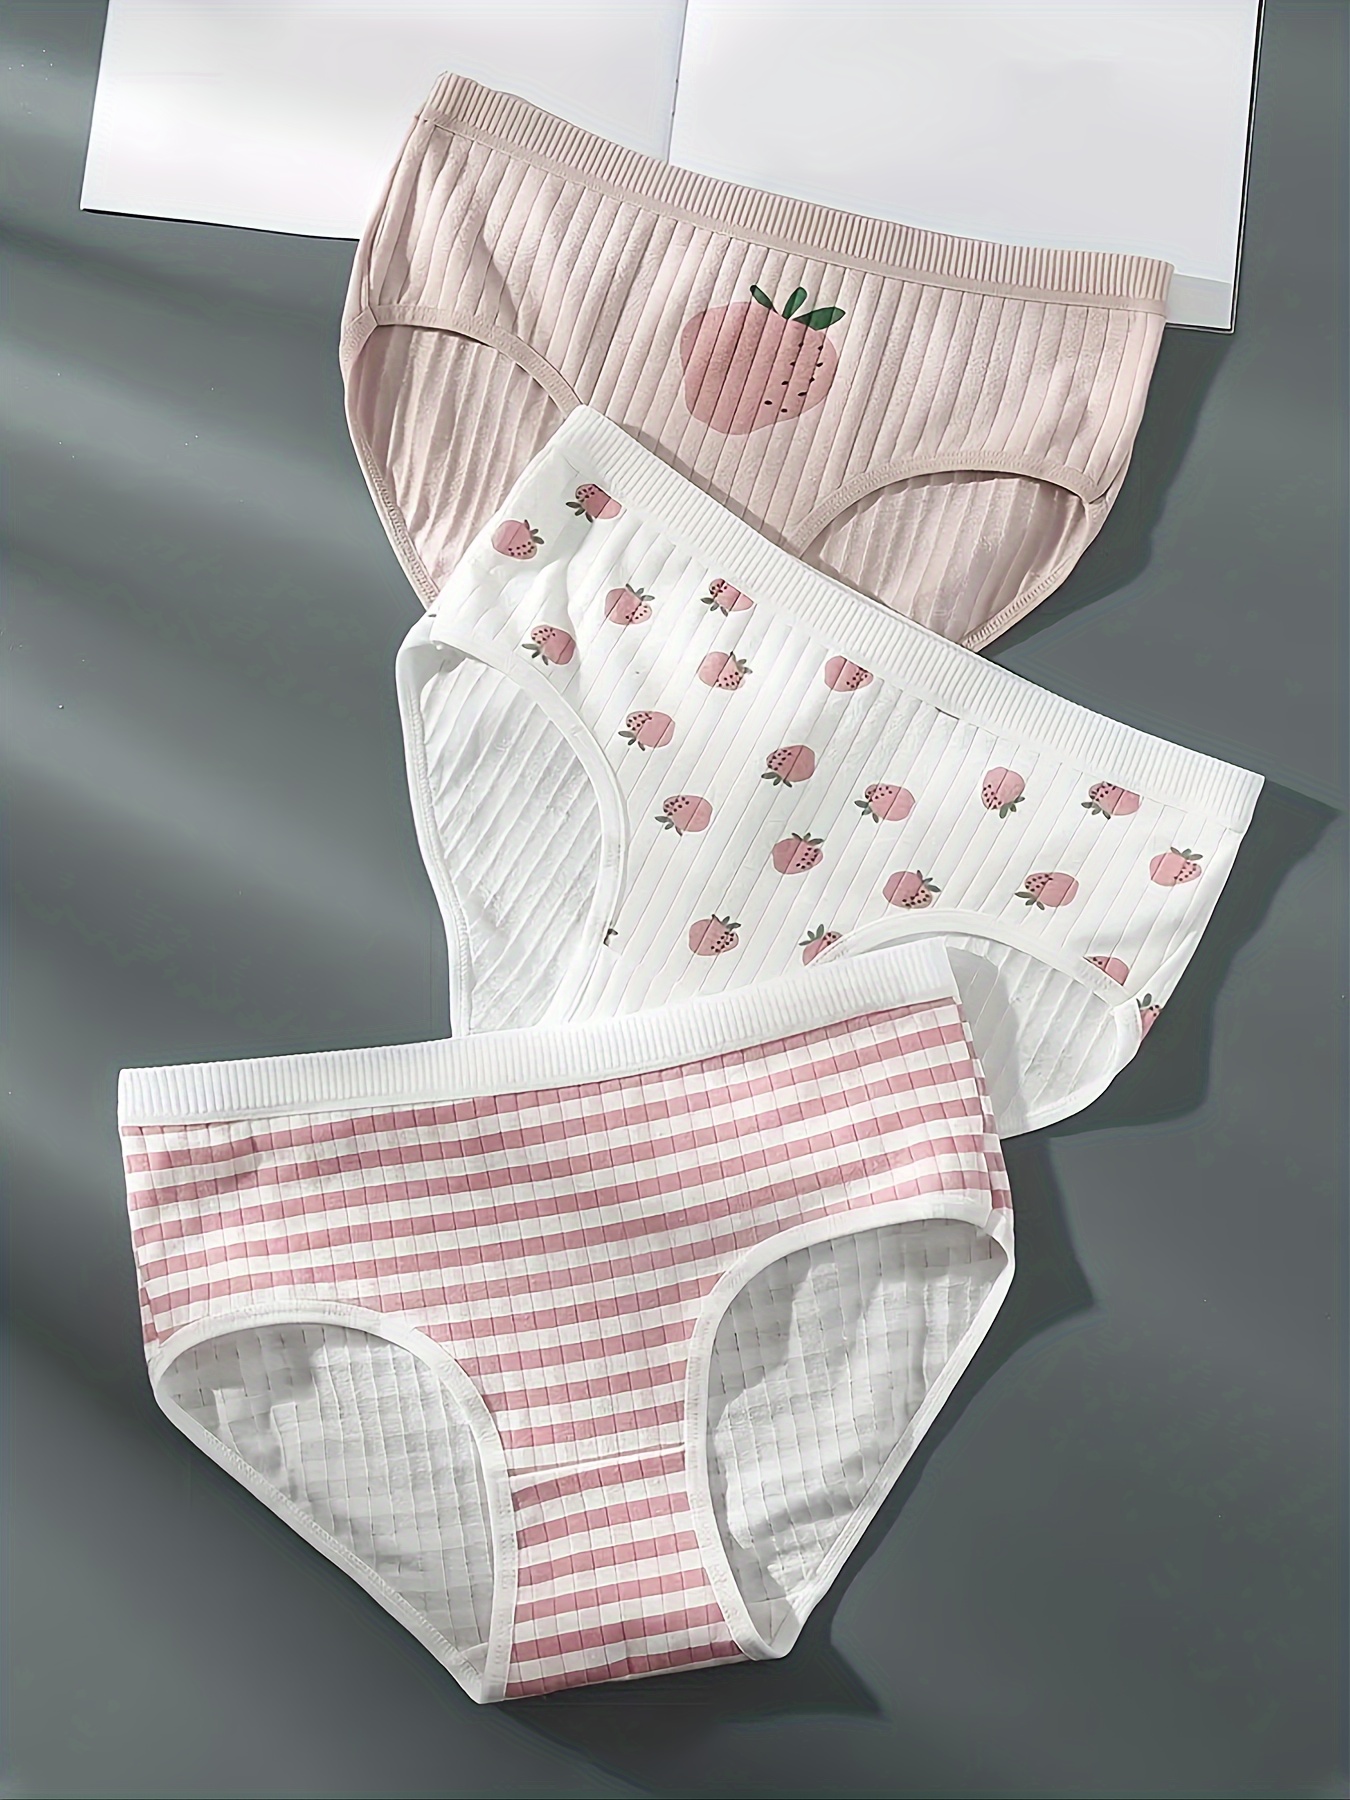 Cute Underwear Panties Womens Cotton Briefs Pantie Comfort